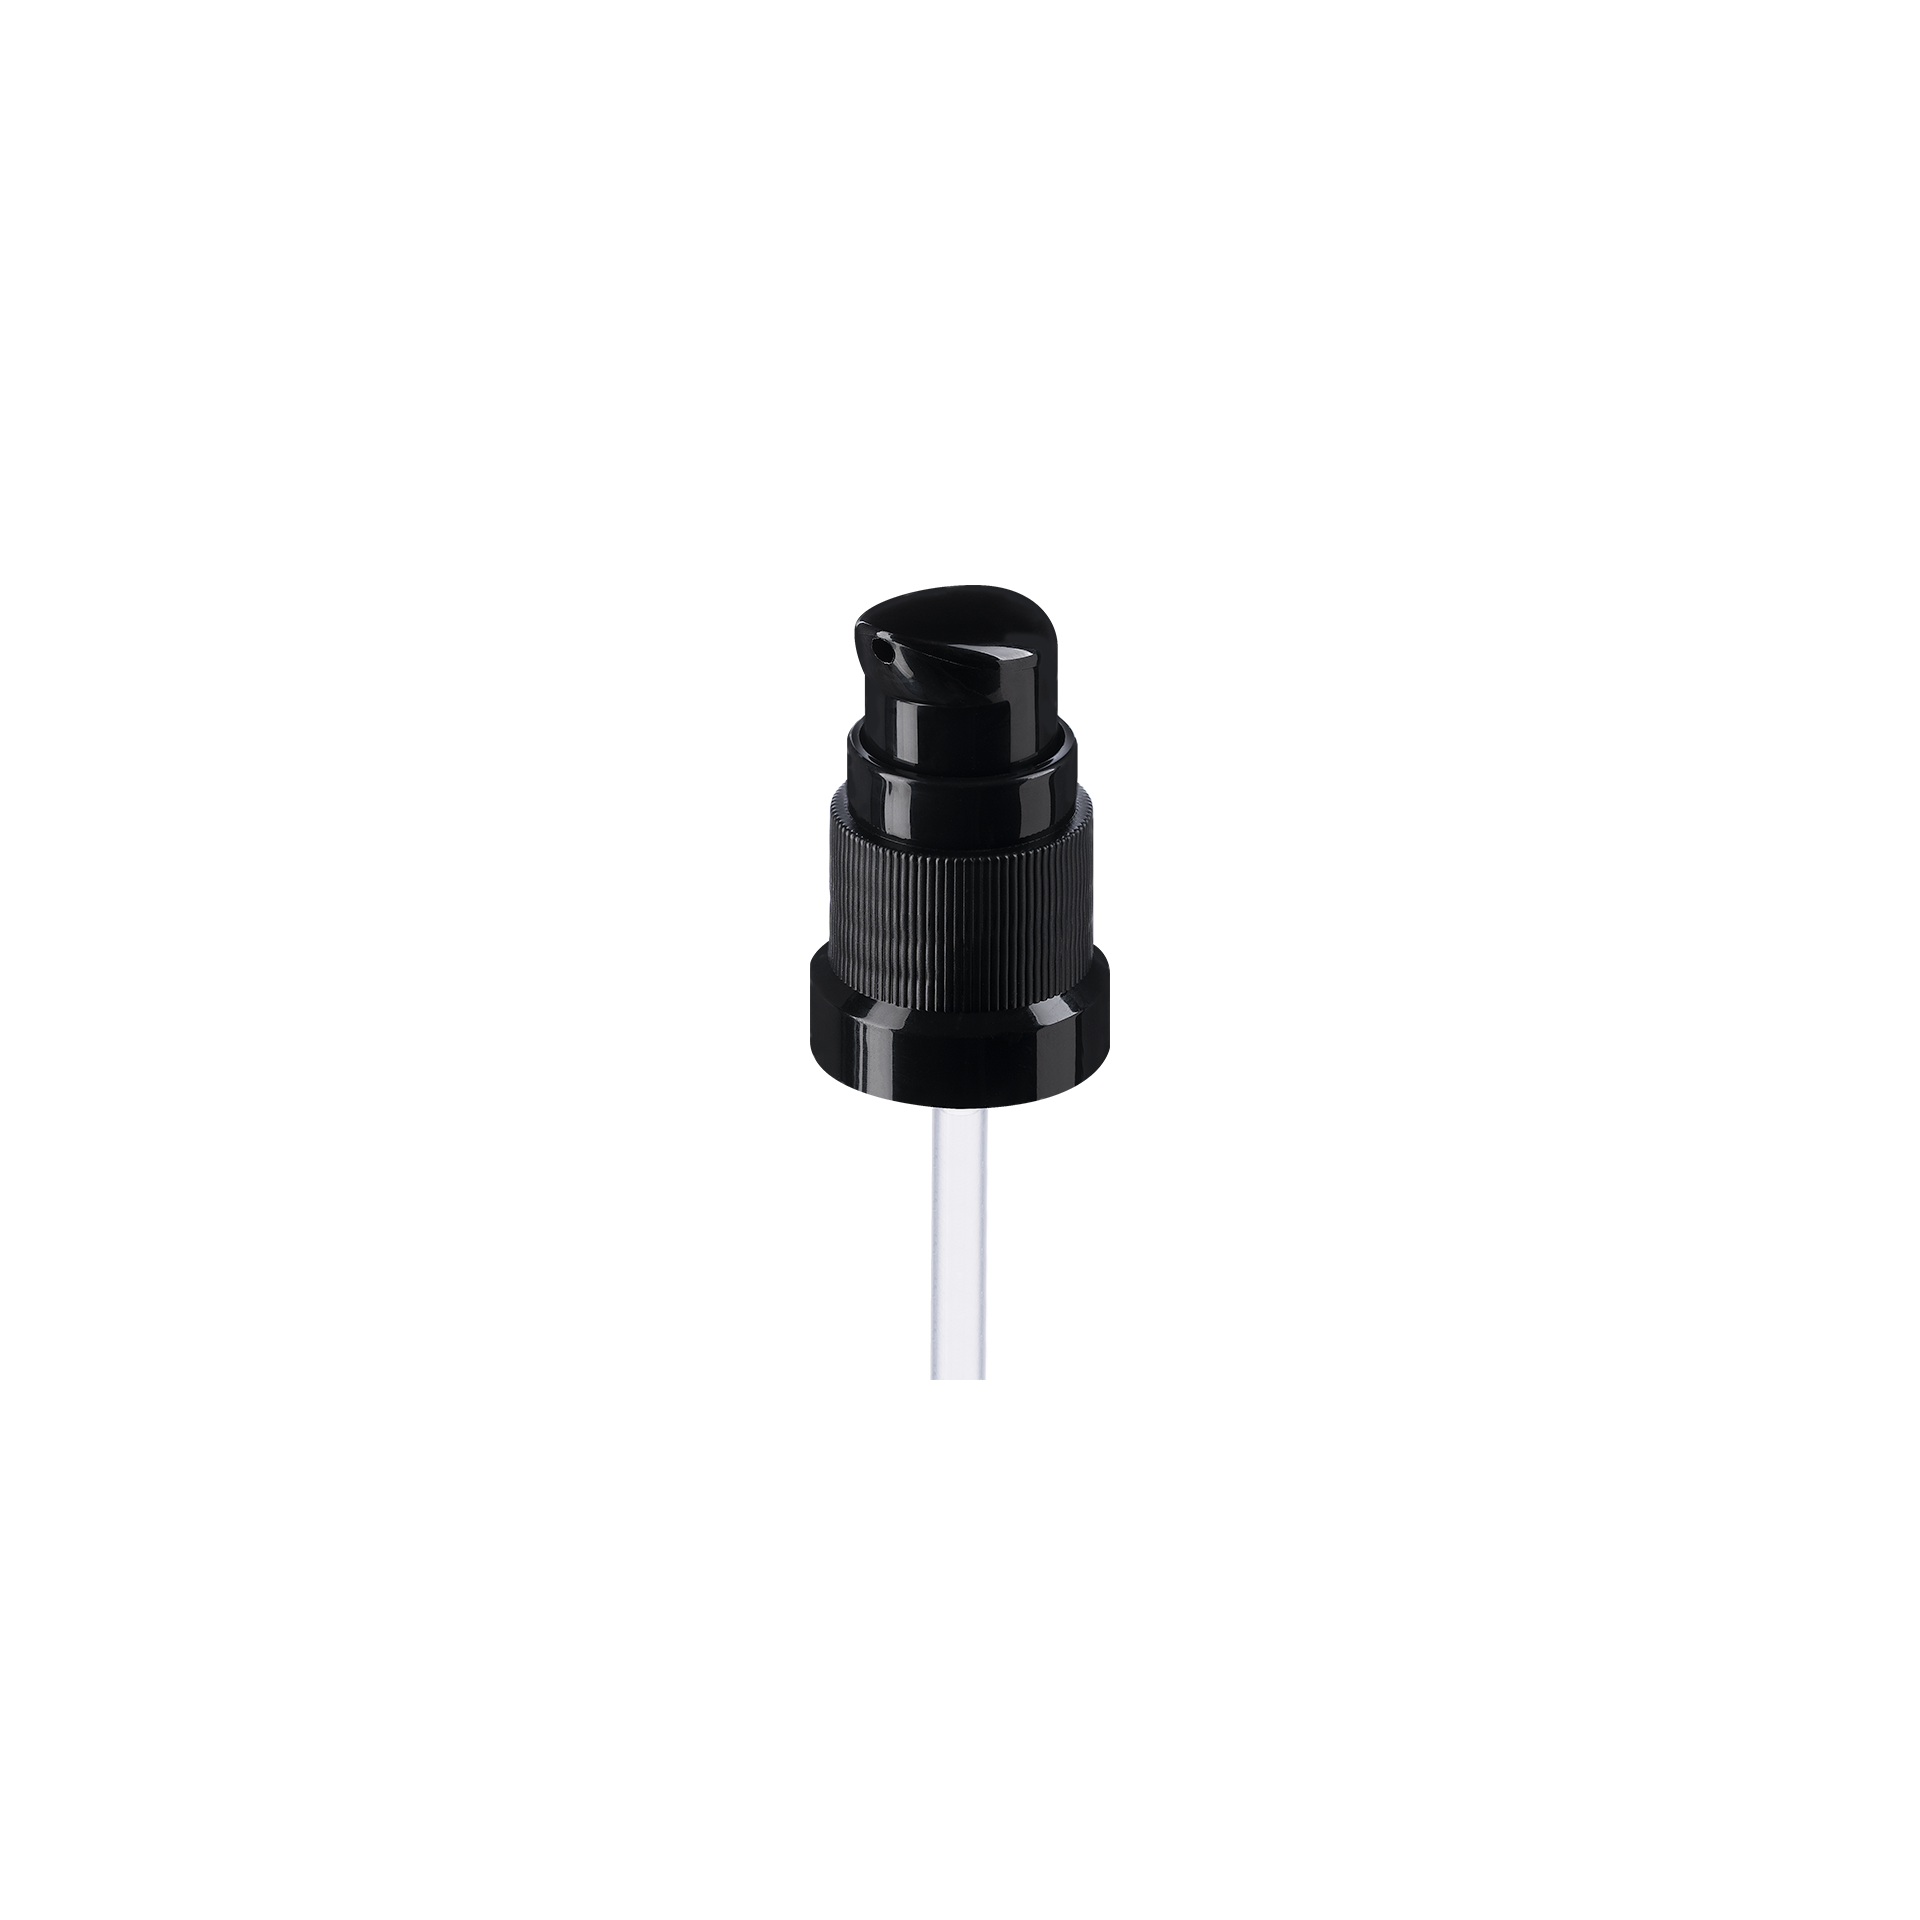 Lotion pump Metropolitan DIN18, PP, black, dose 0.10ml, black security clip (Jasmine 30)